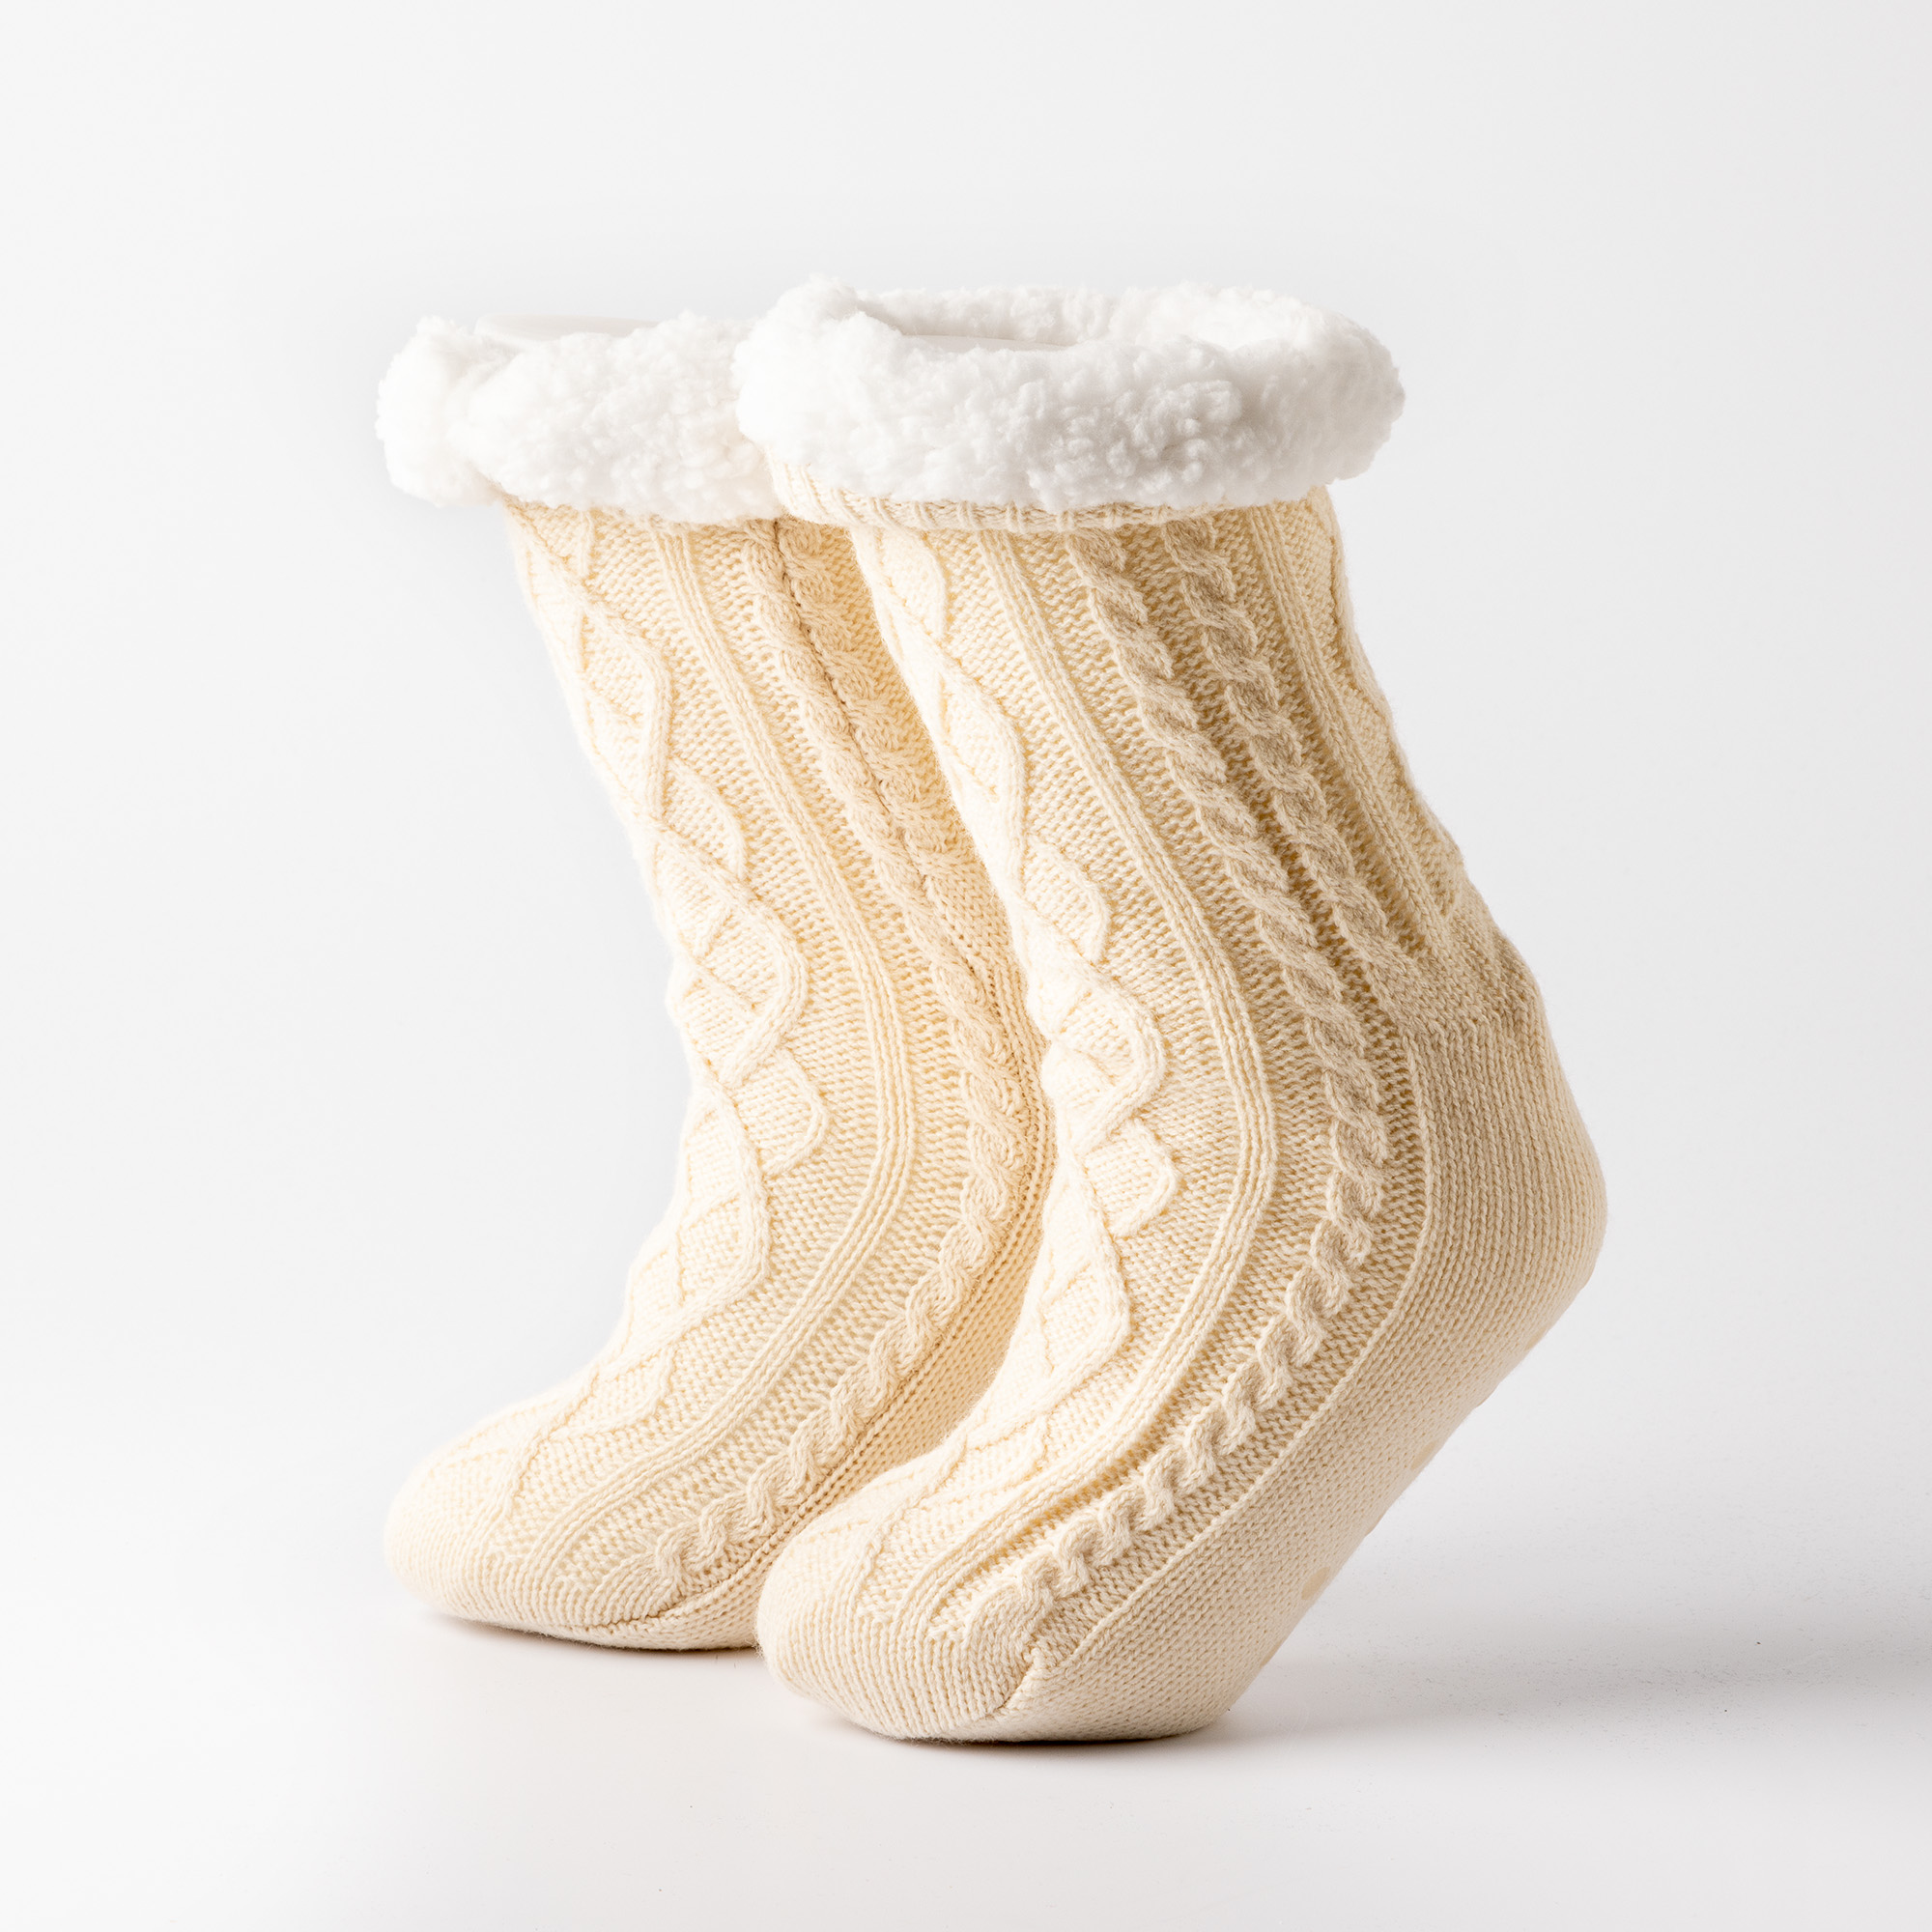 ELZA - House socks - non-slip - with sherpa lining - one size - Bone White - white